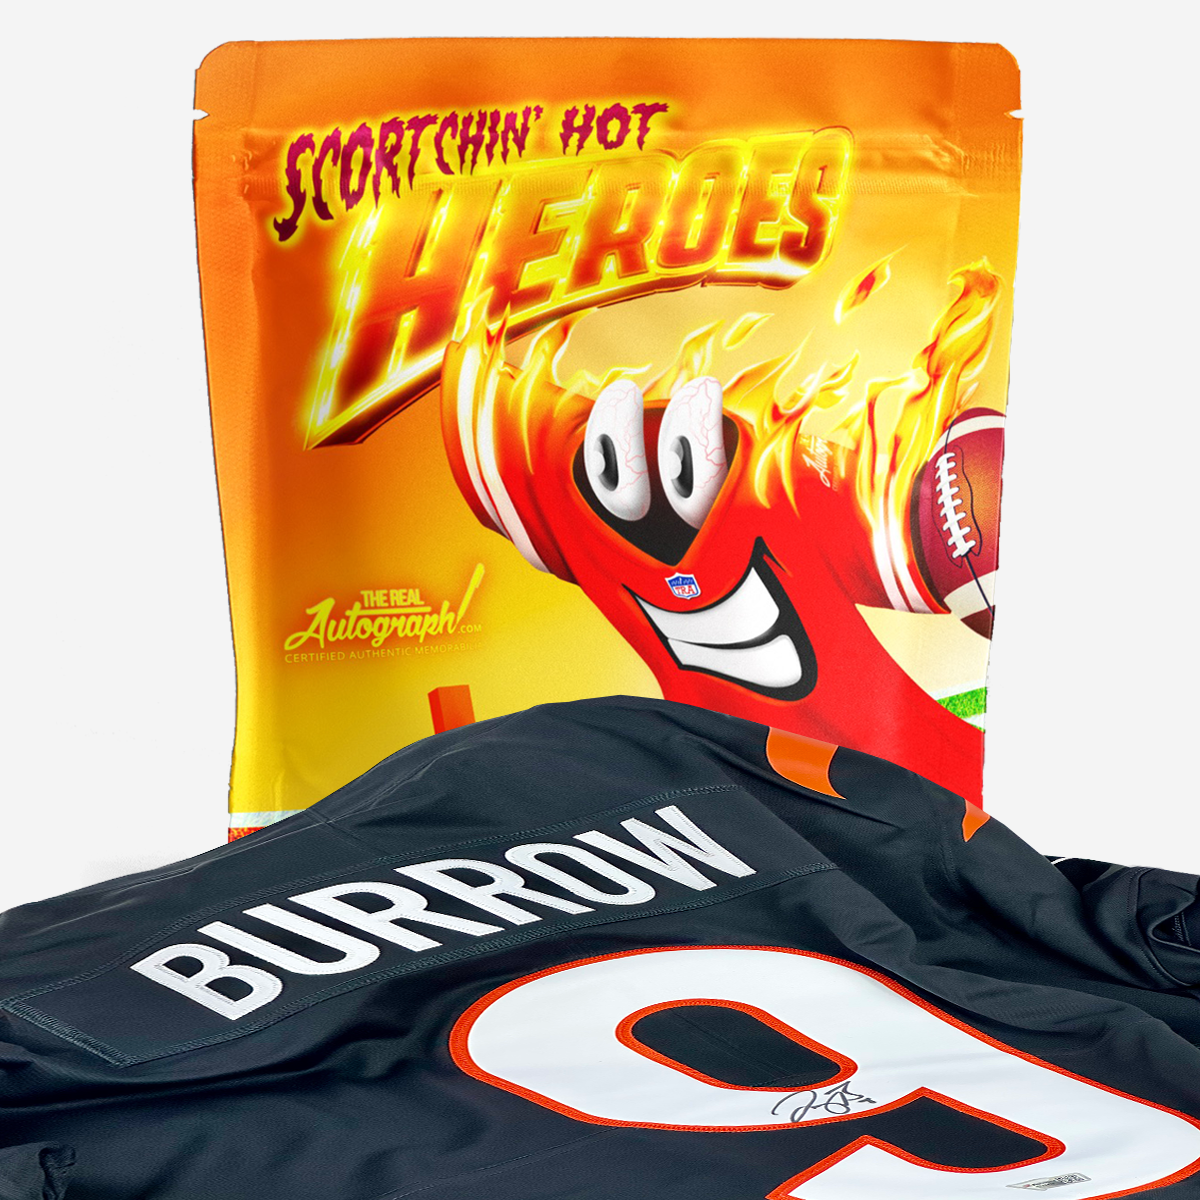 Scortchin' Hot Heroes Bag